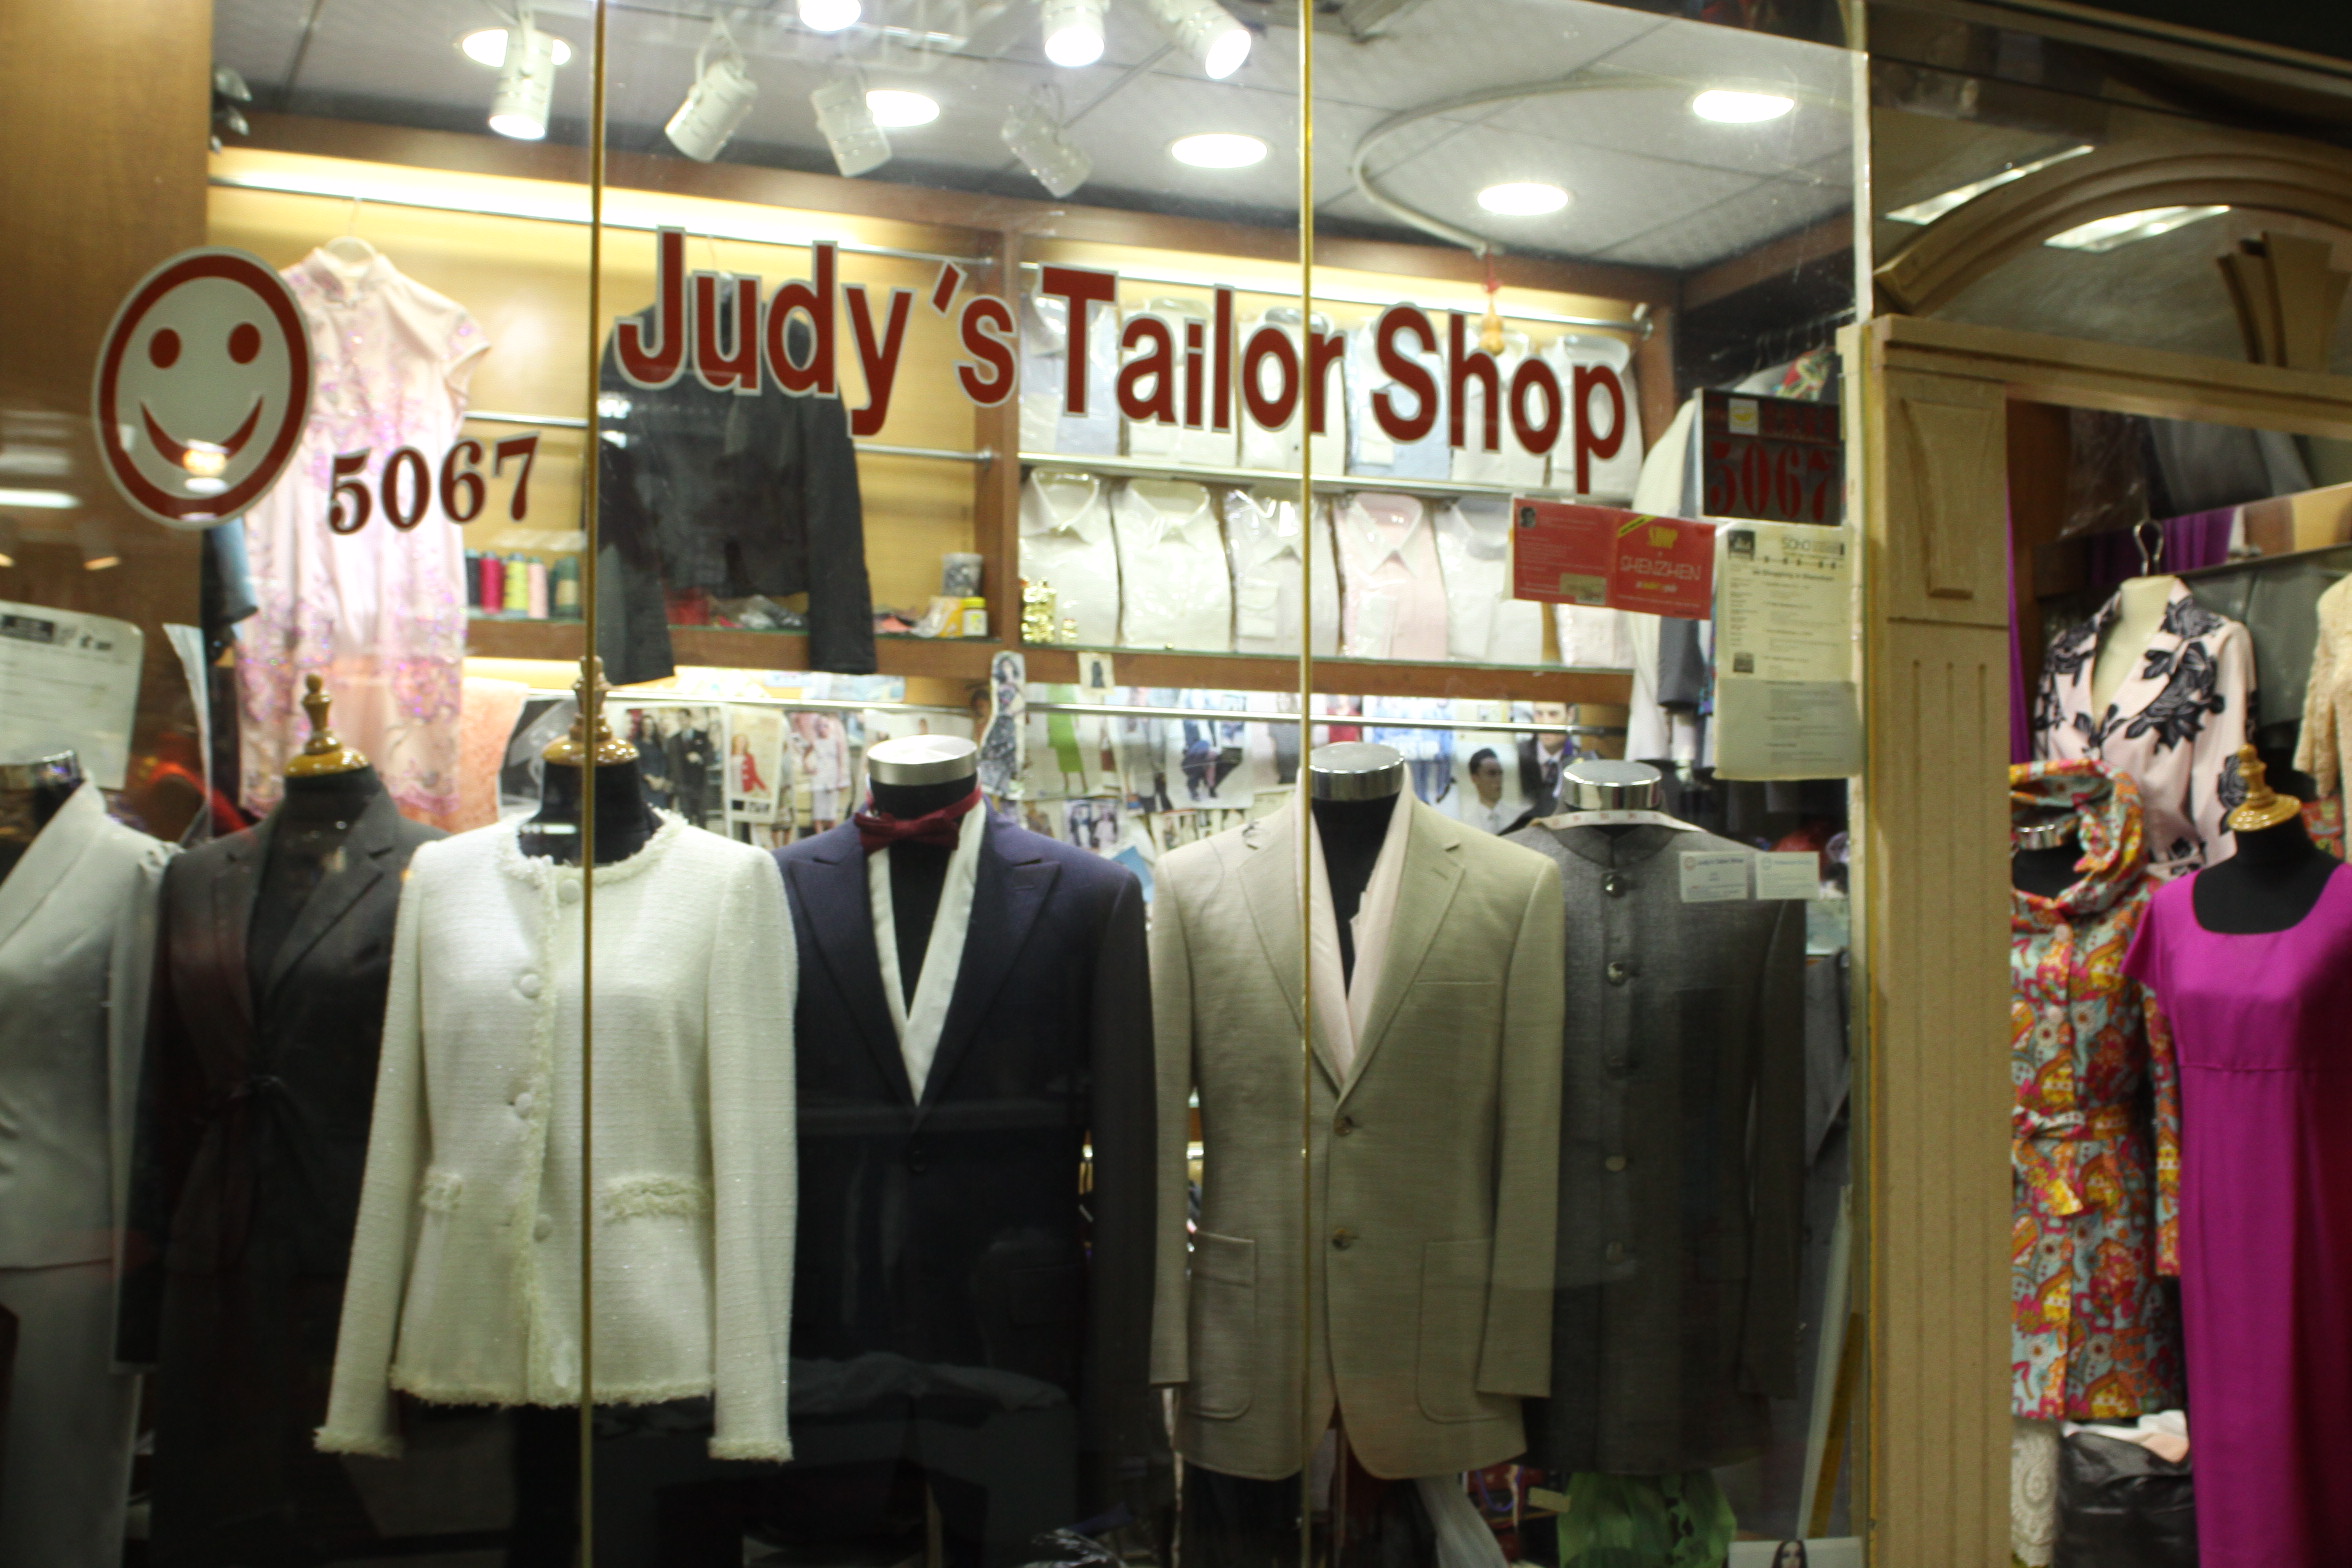 judy's tailor shop 5067铺